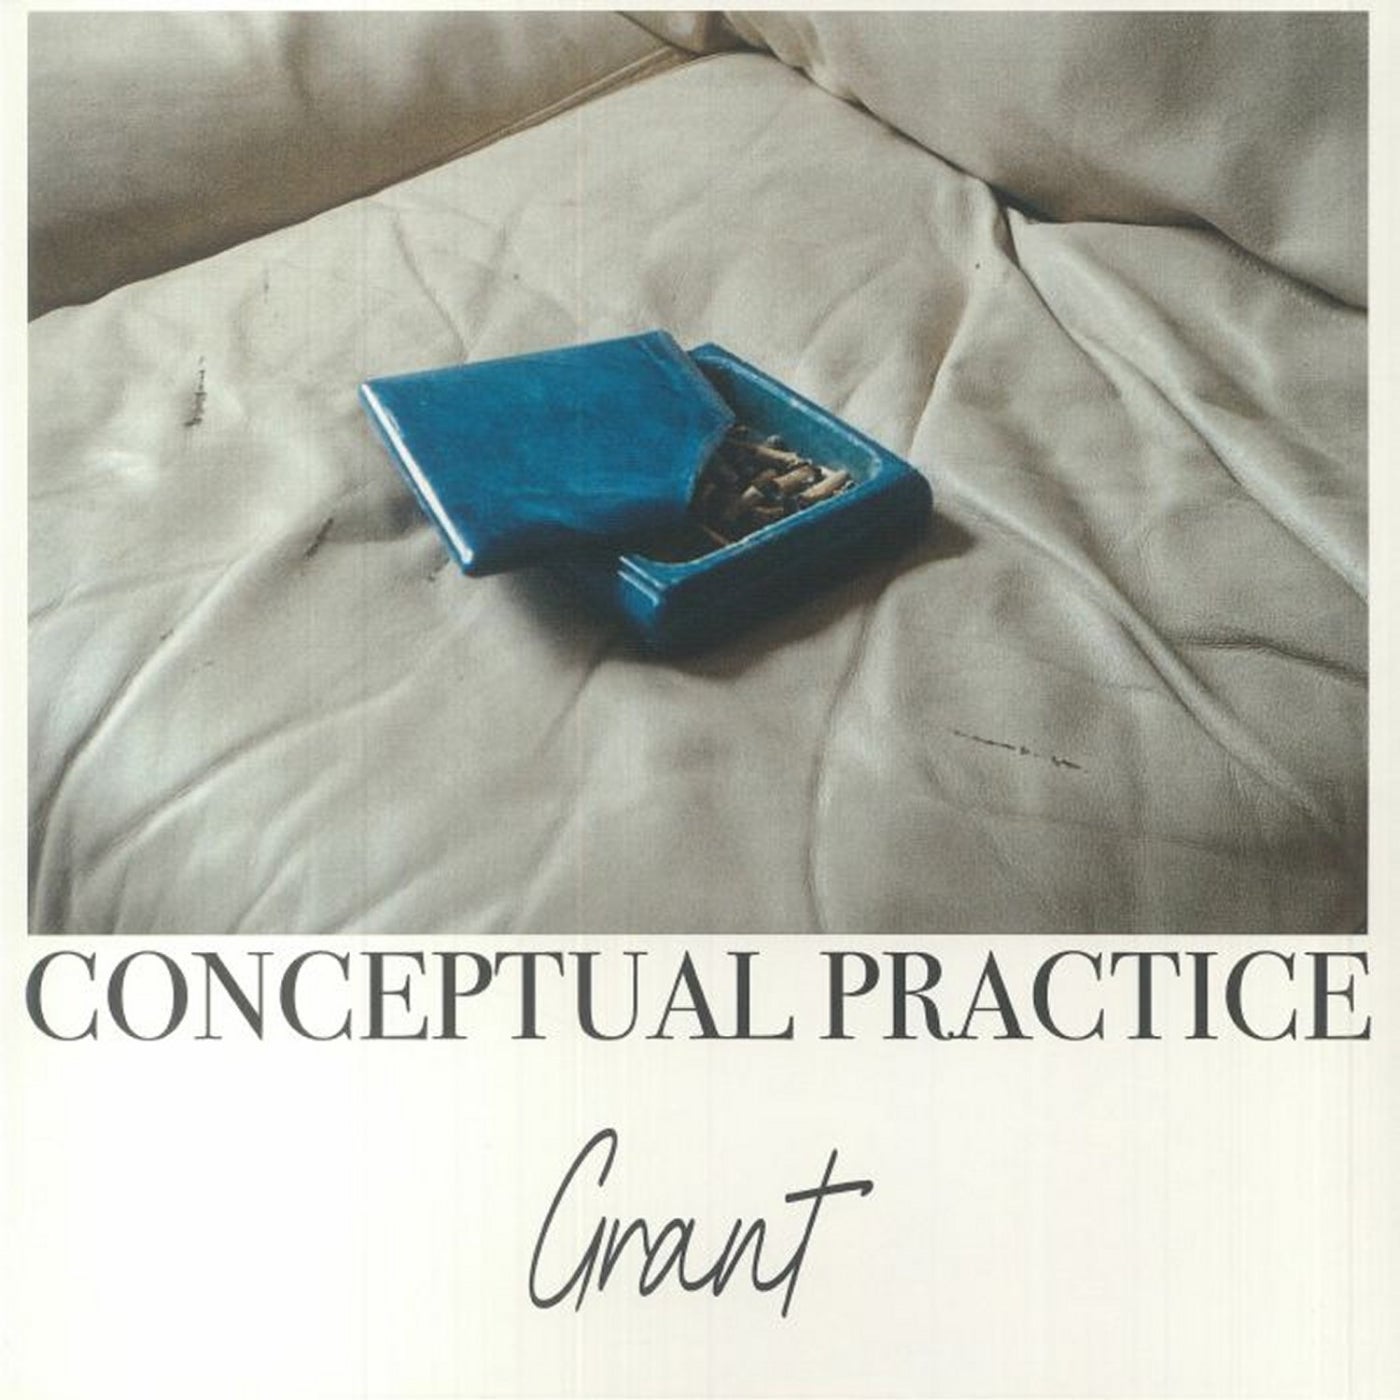 Conceptual Practice EP